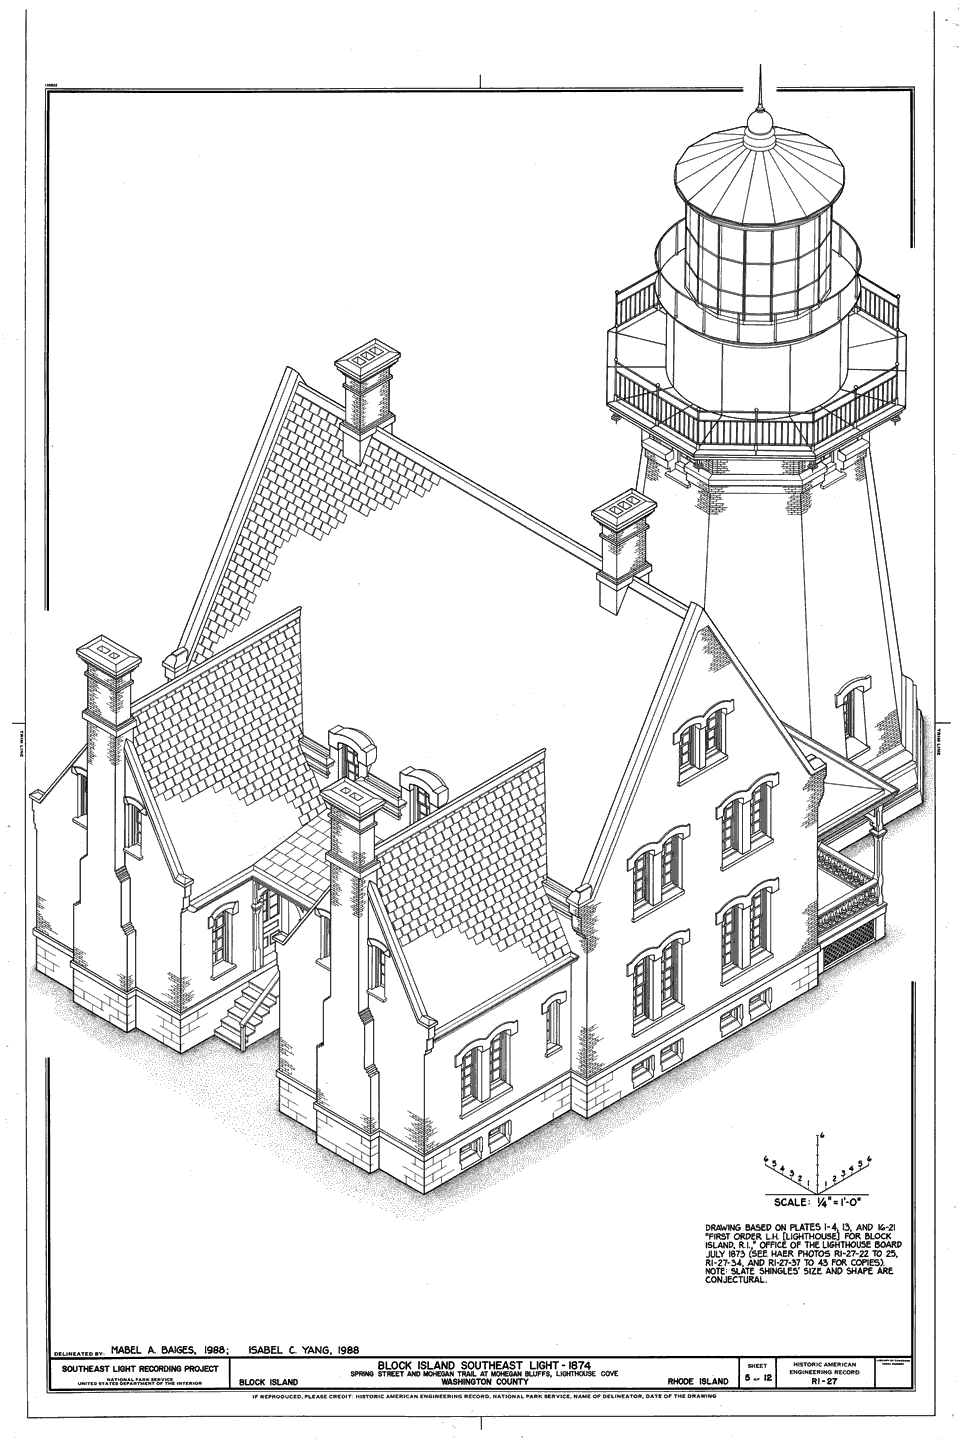 Rear Elevation of Block Island Southeast Lighthouse